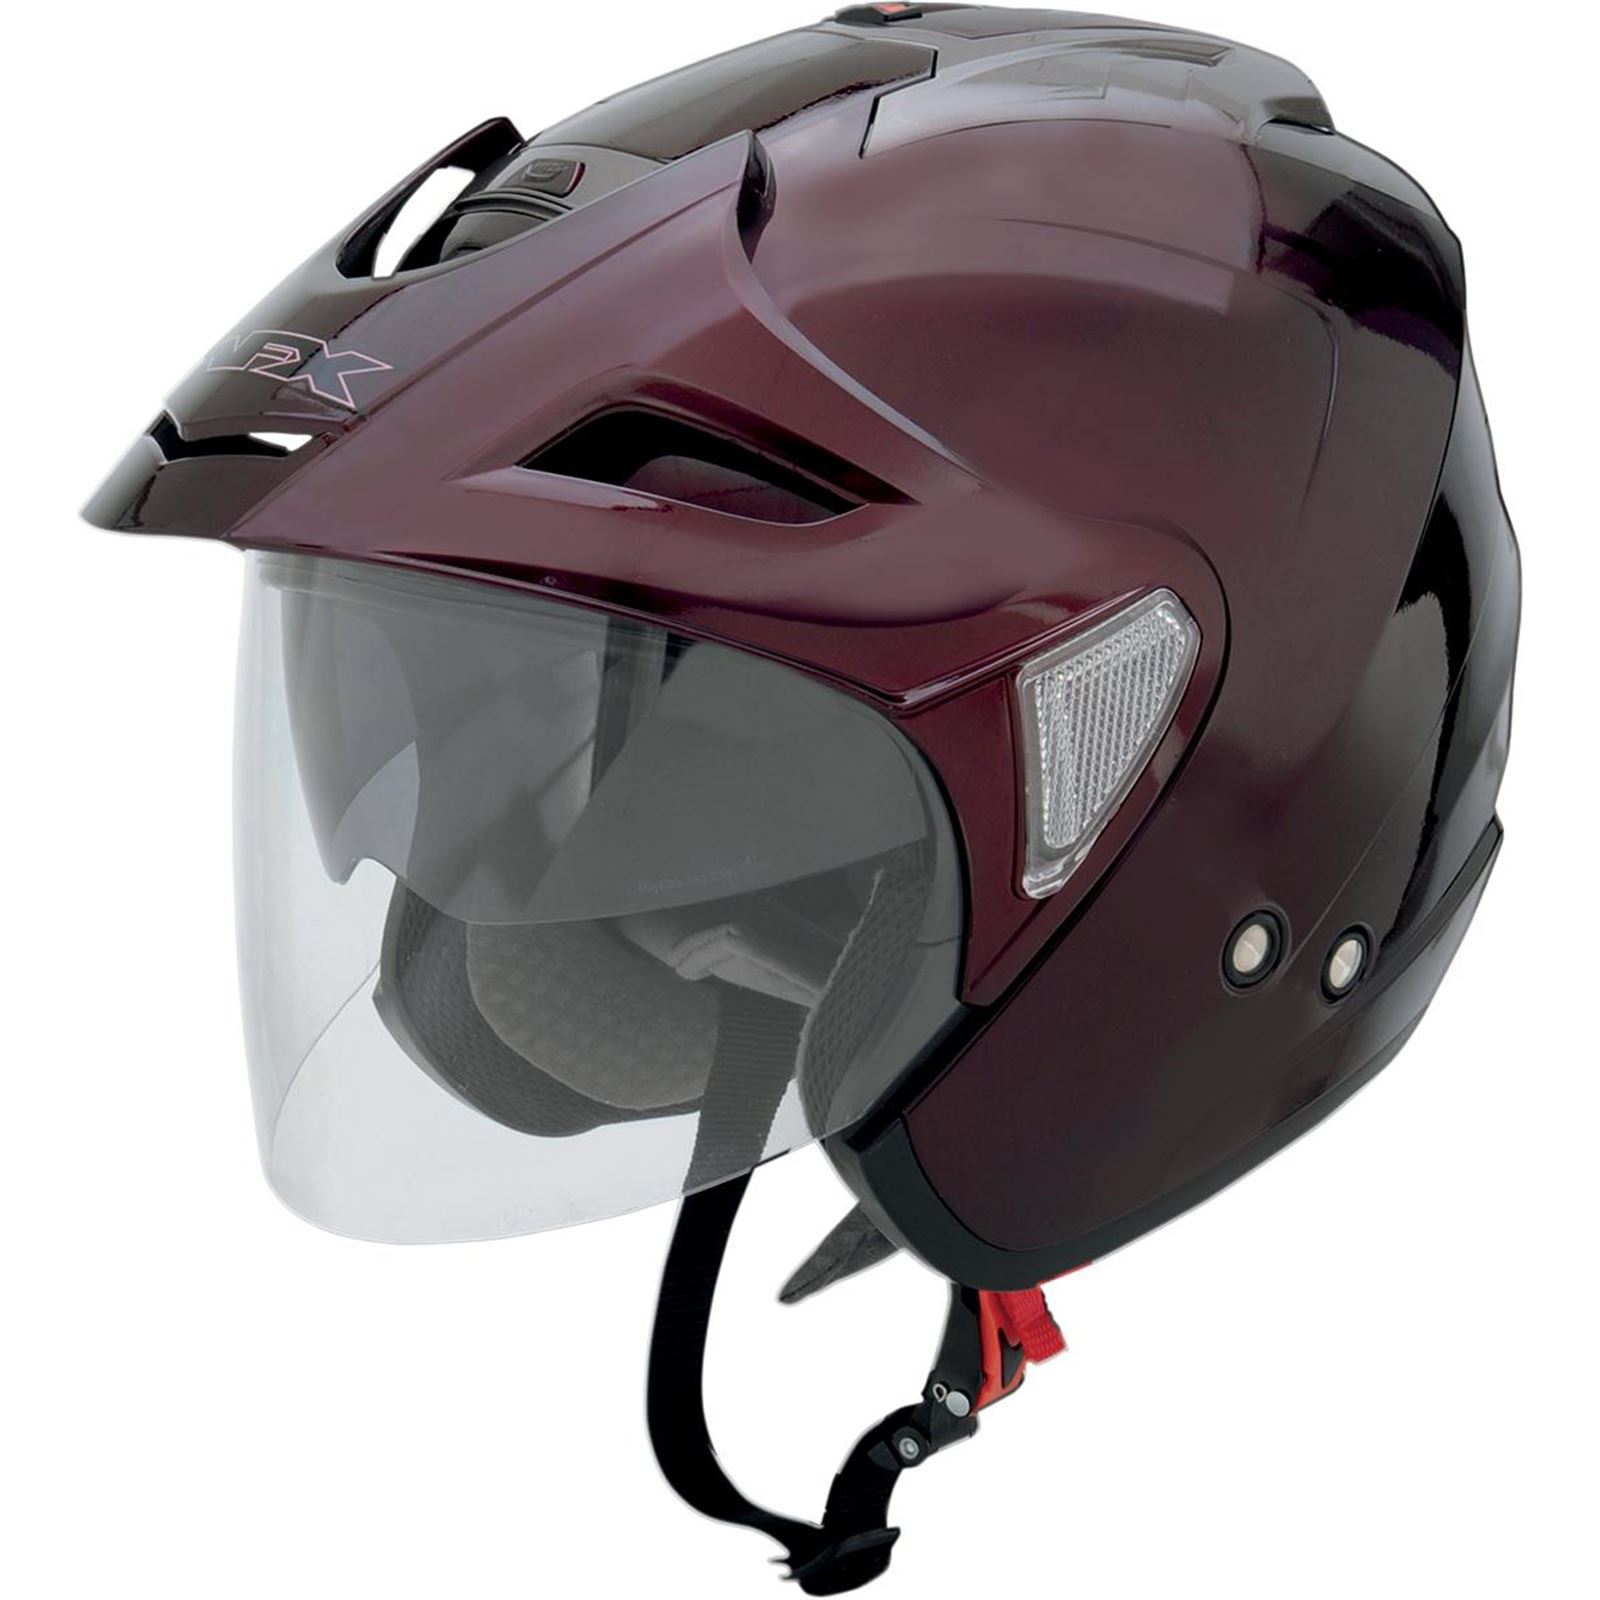 AFX FX-50 Helmet - Wine - Small